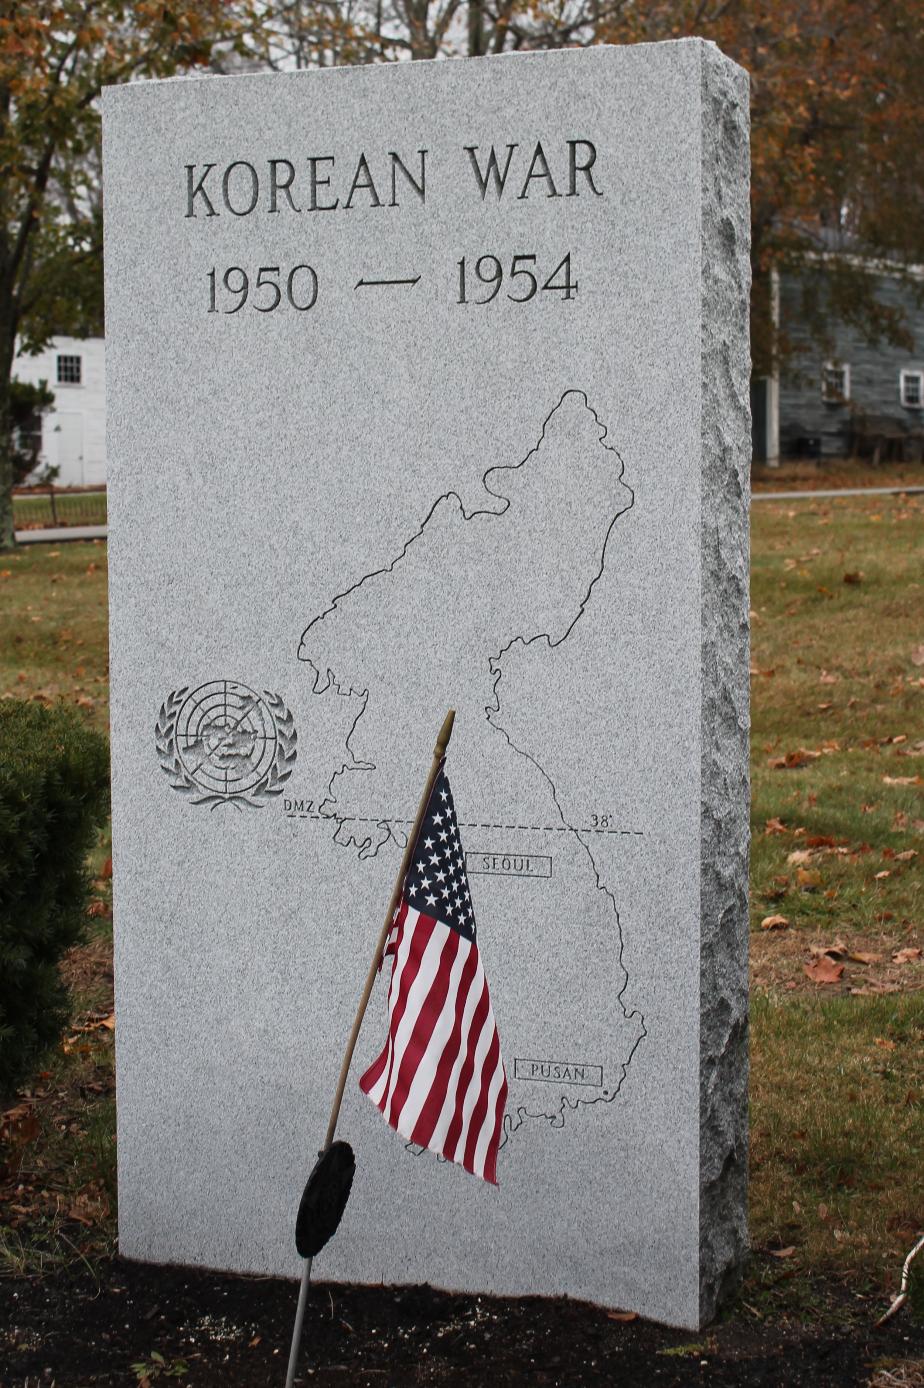 Hamnpstead New Hampshire Korean War Veterans Memorial